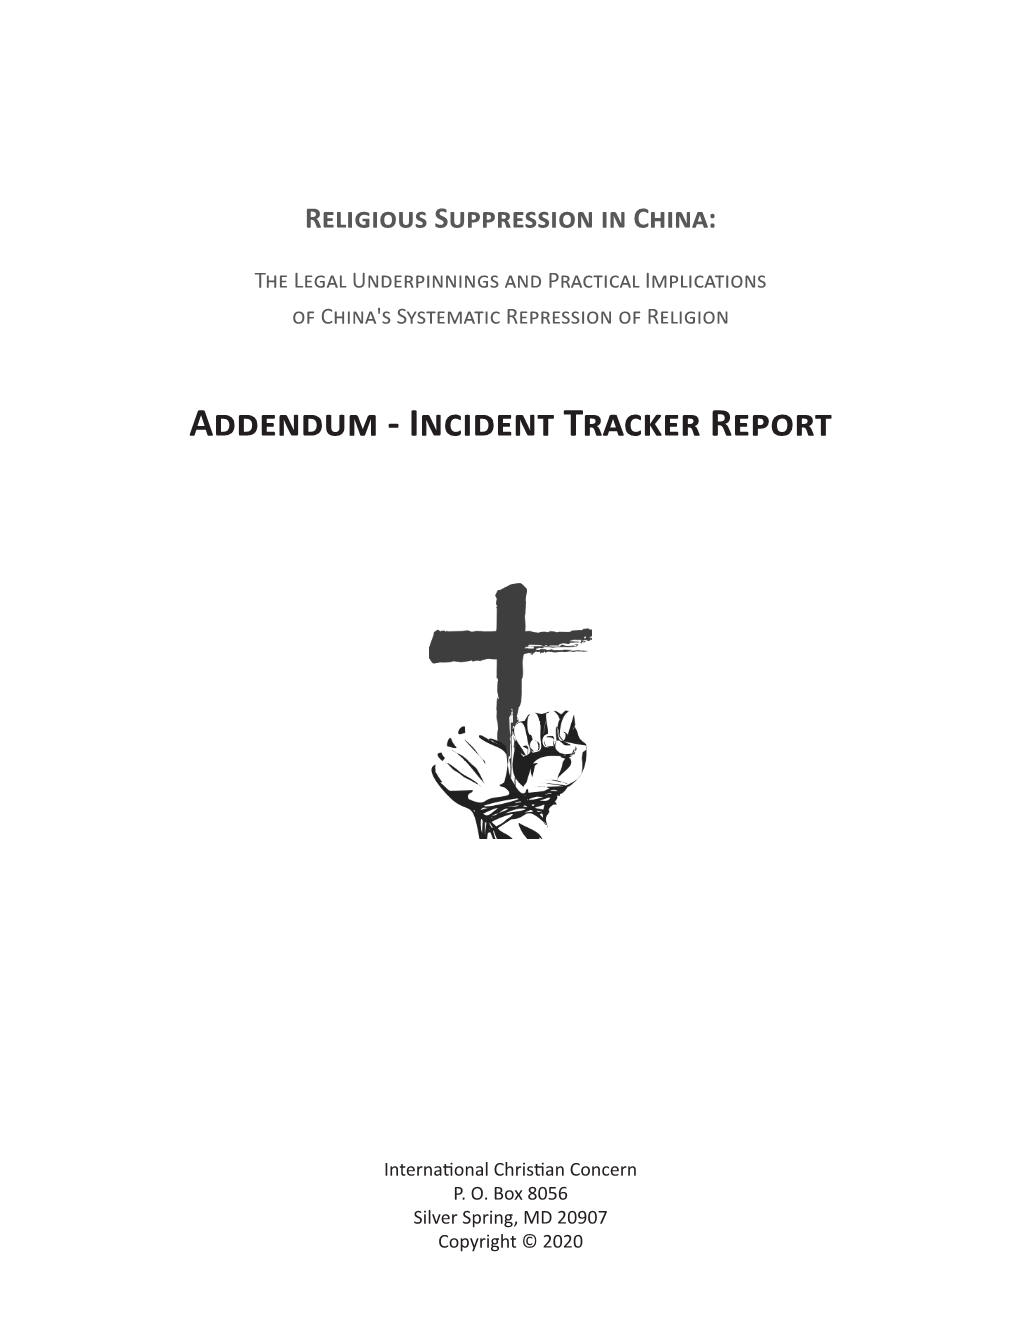 Addendum - Incident Tracker Report